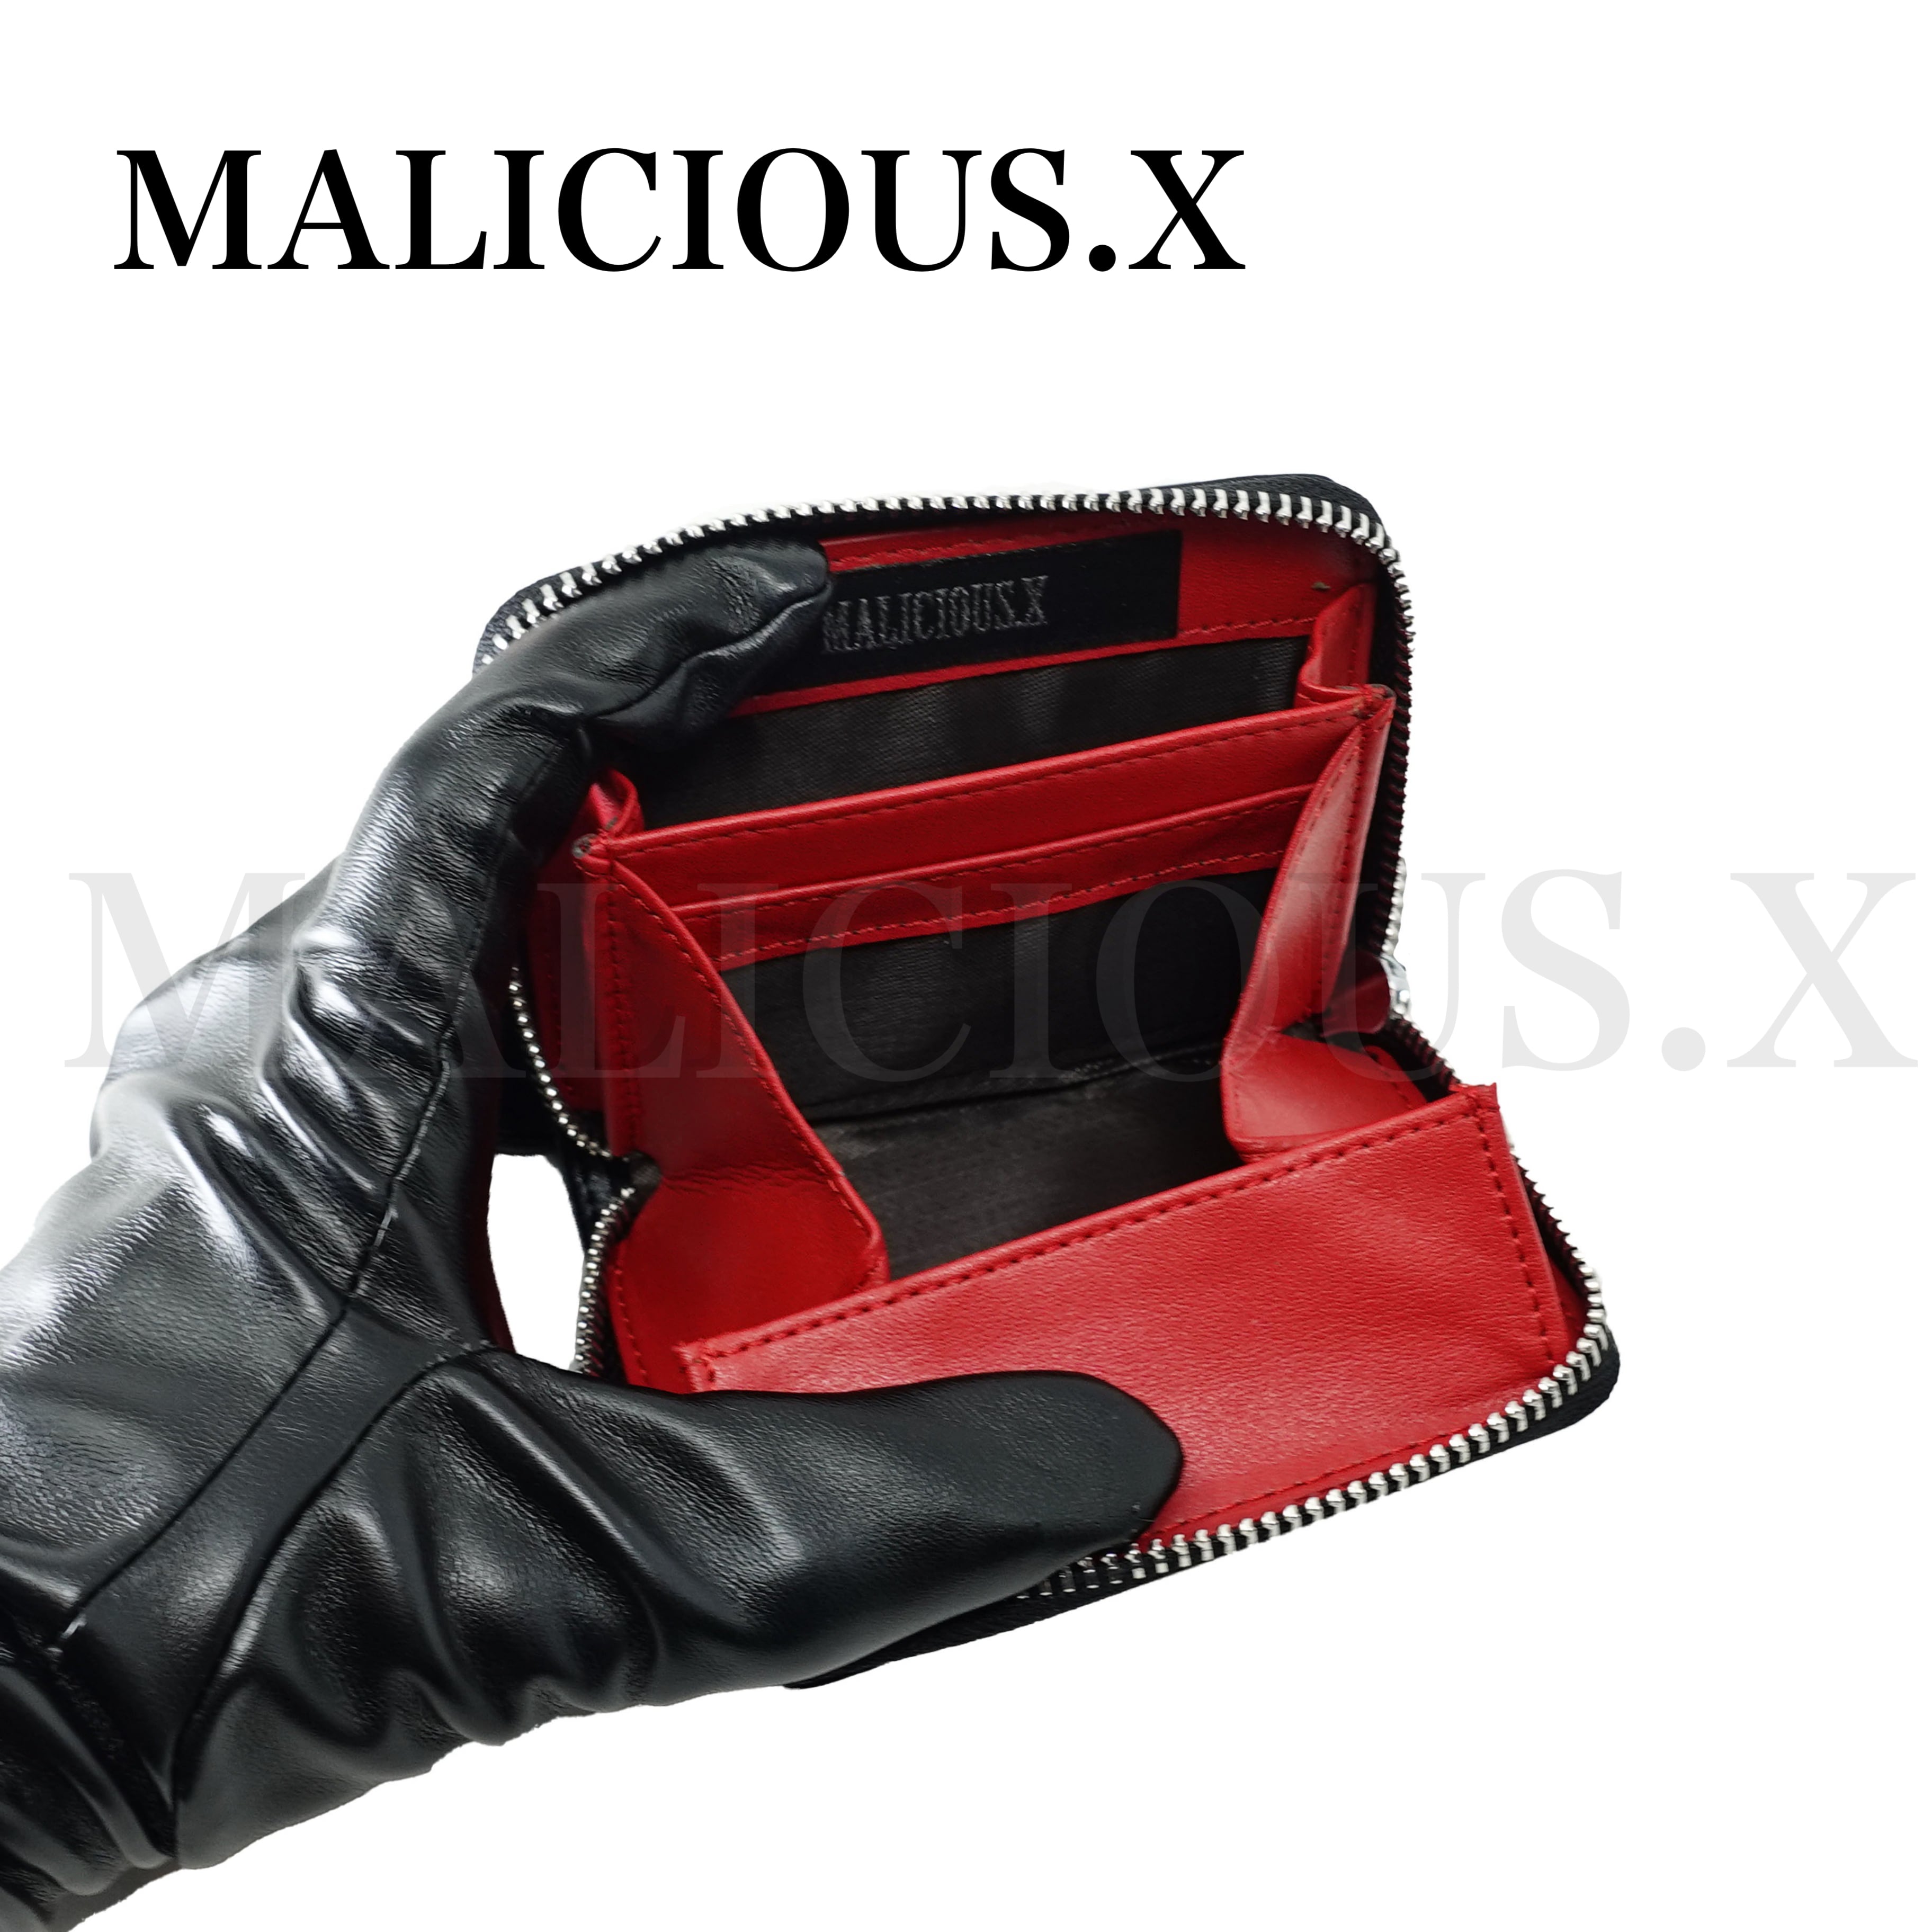 malicious.x 財布